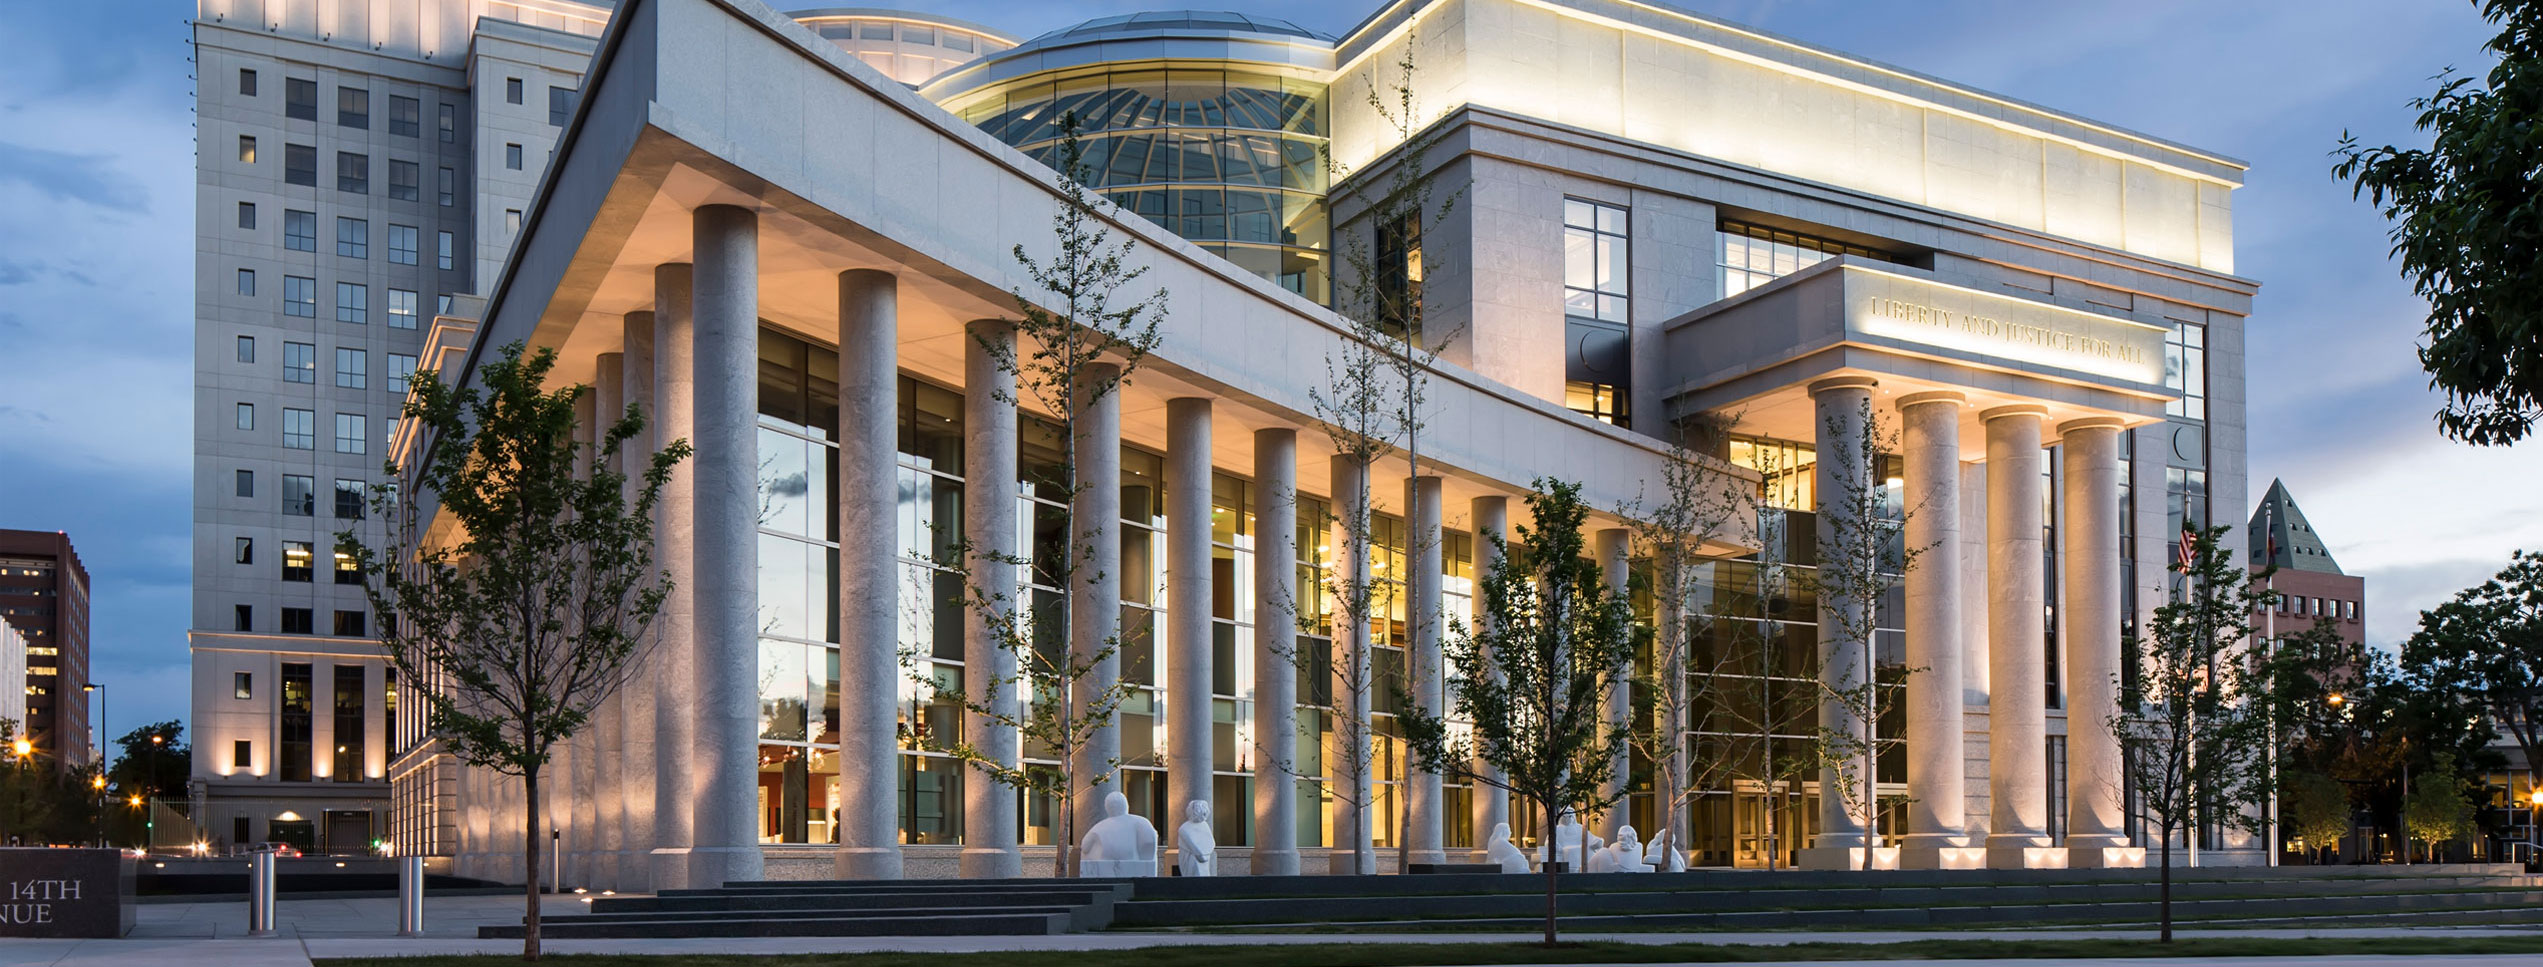 Exterior of brand new judicial center with pillars and large windows